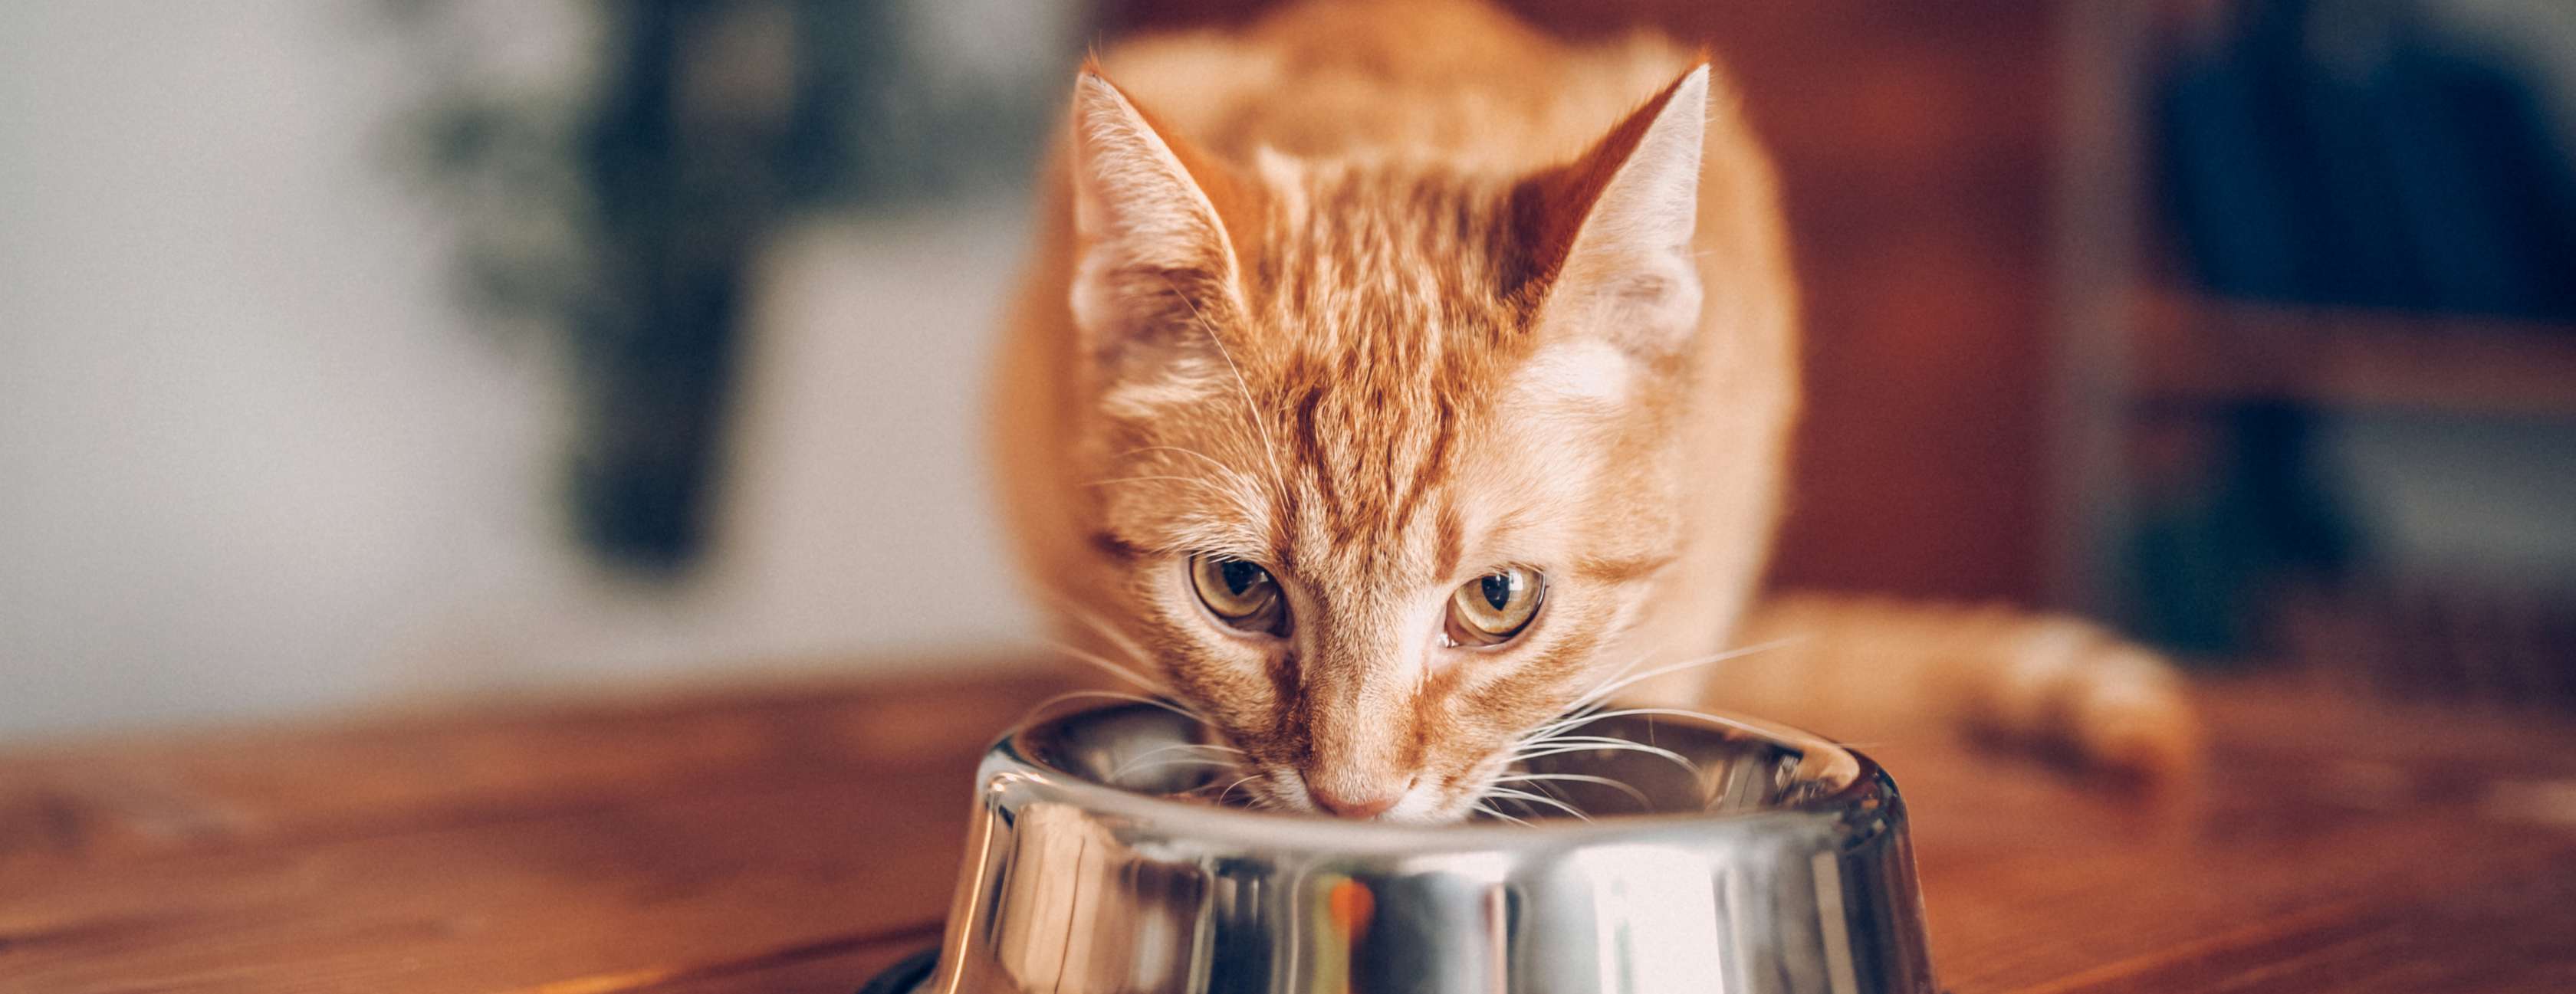 Katzenversicherung Blasenentzündung: Katze frisst aus Fressnapf